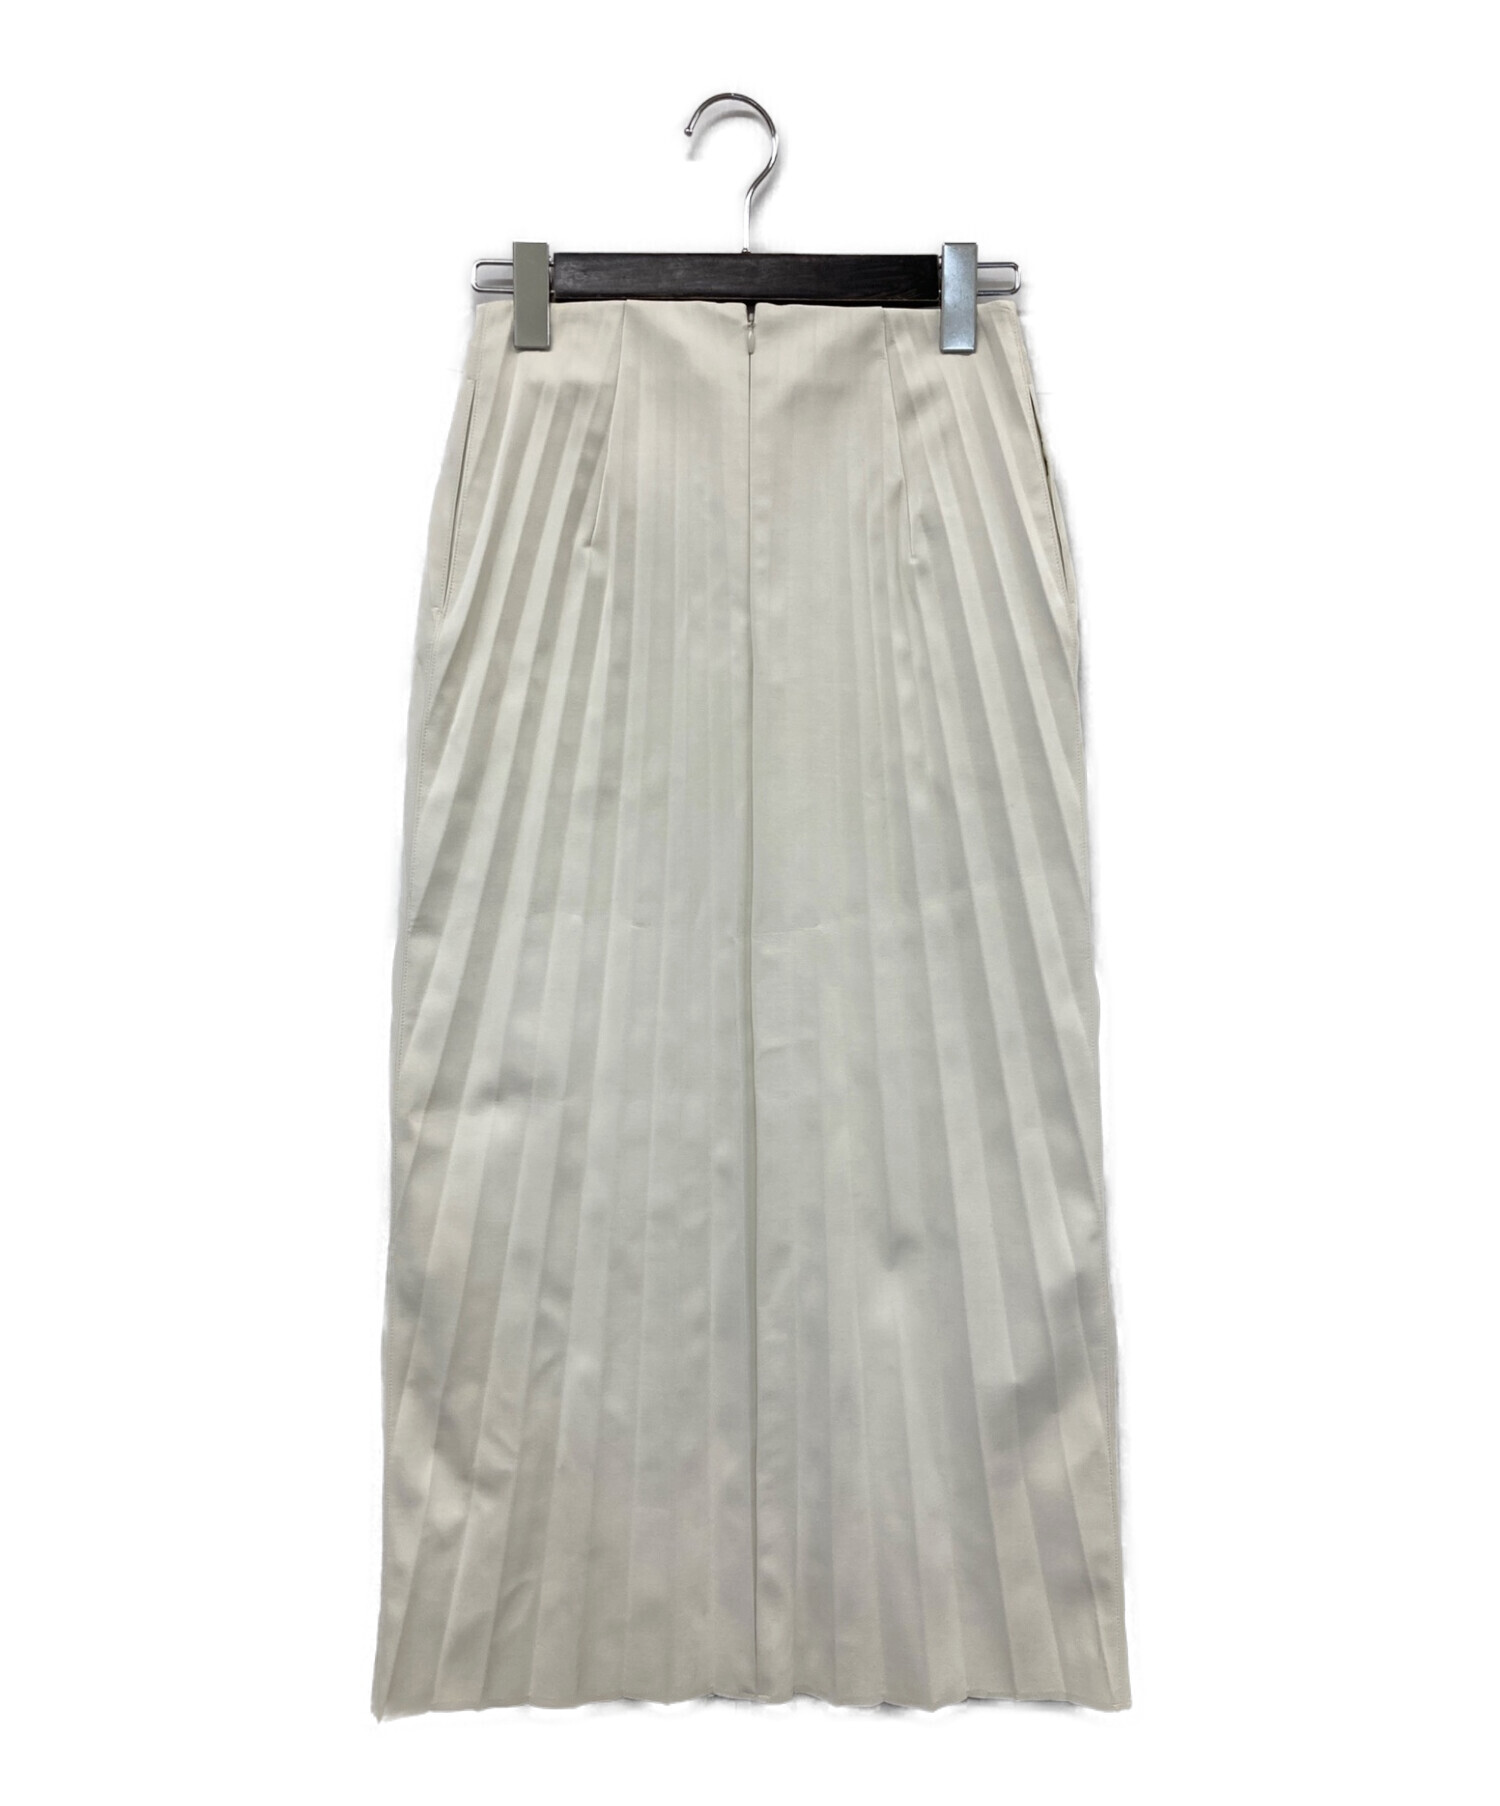 IRENE (アイレネ) Silky Leather Skirt ホワイト サイズ:36